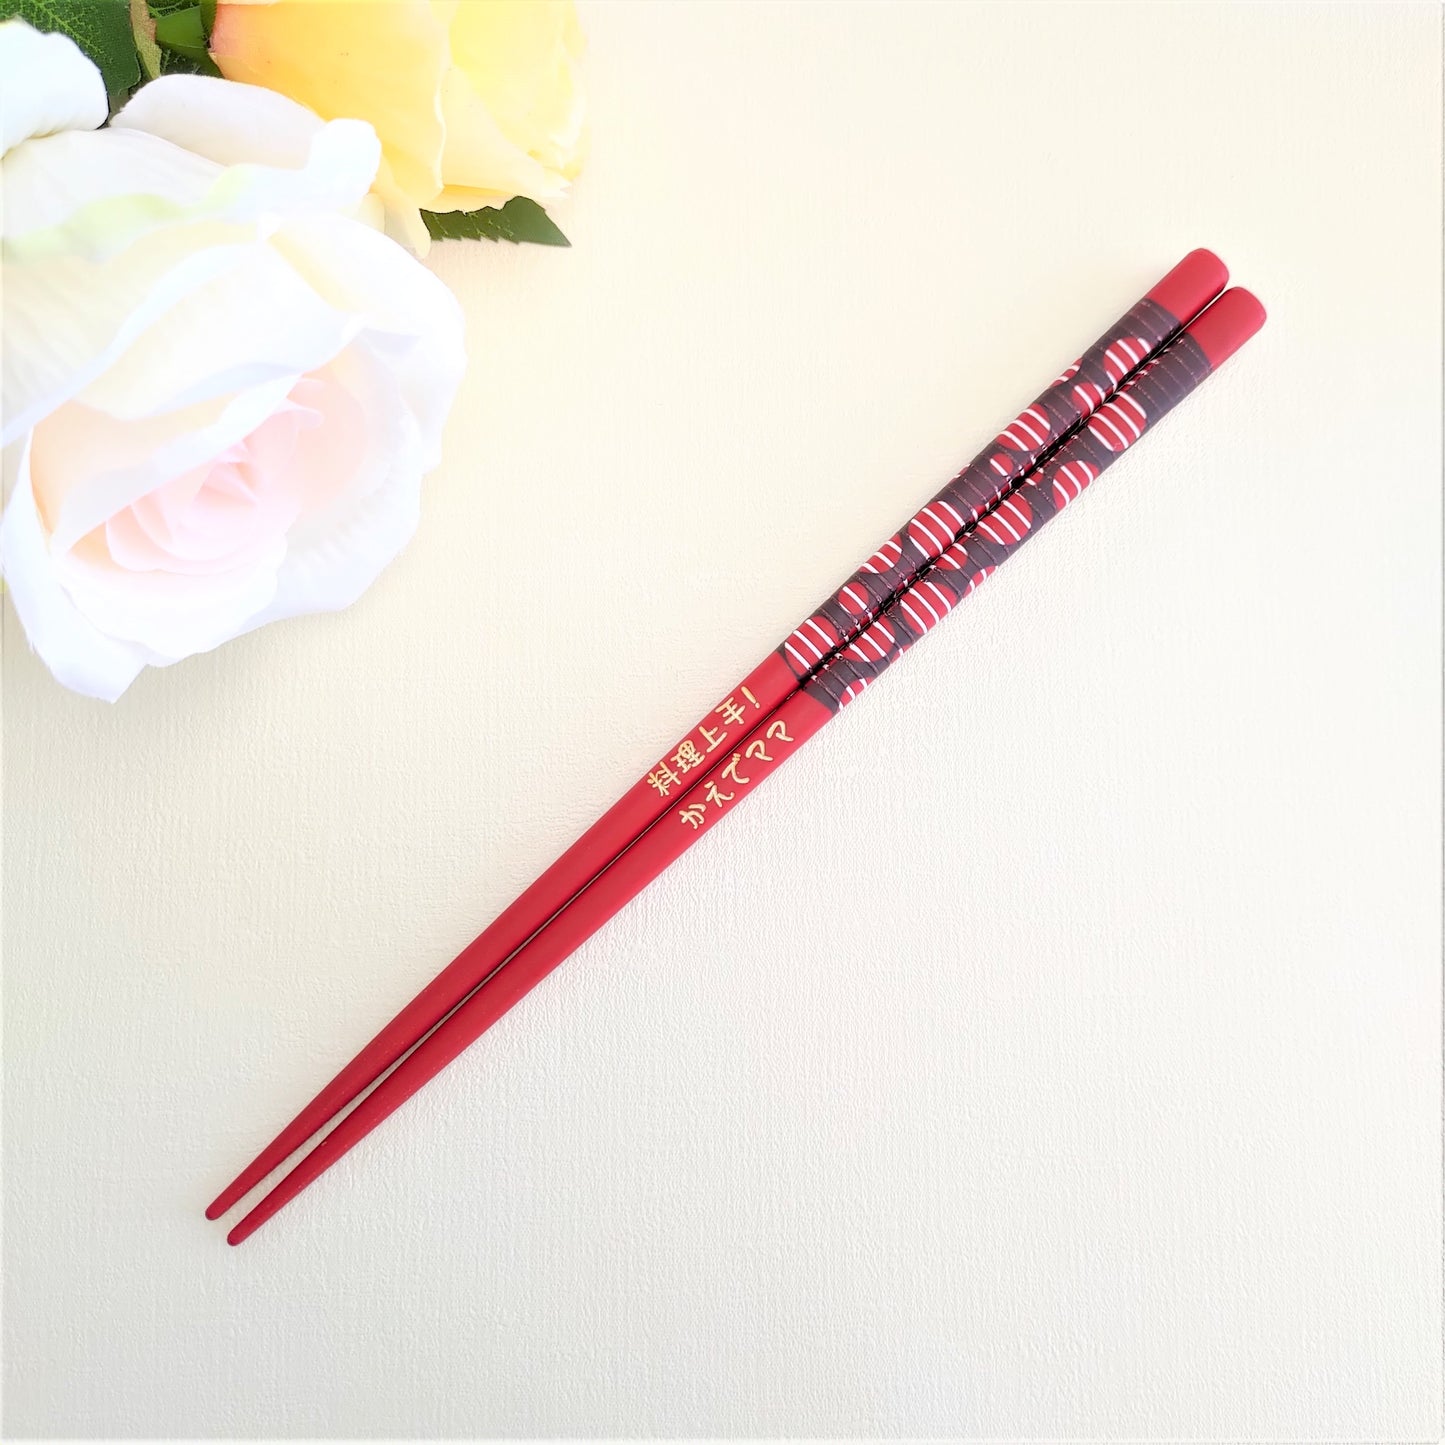 Polka dots original design Japanese chopsticks black red - SINGLE PAIR WITH ENGRAVED WOODEN BOX SET